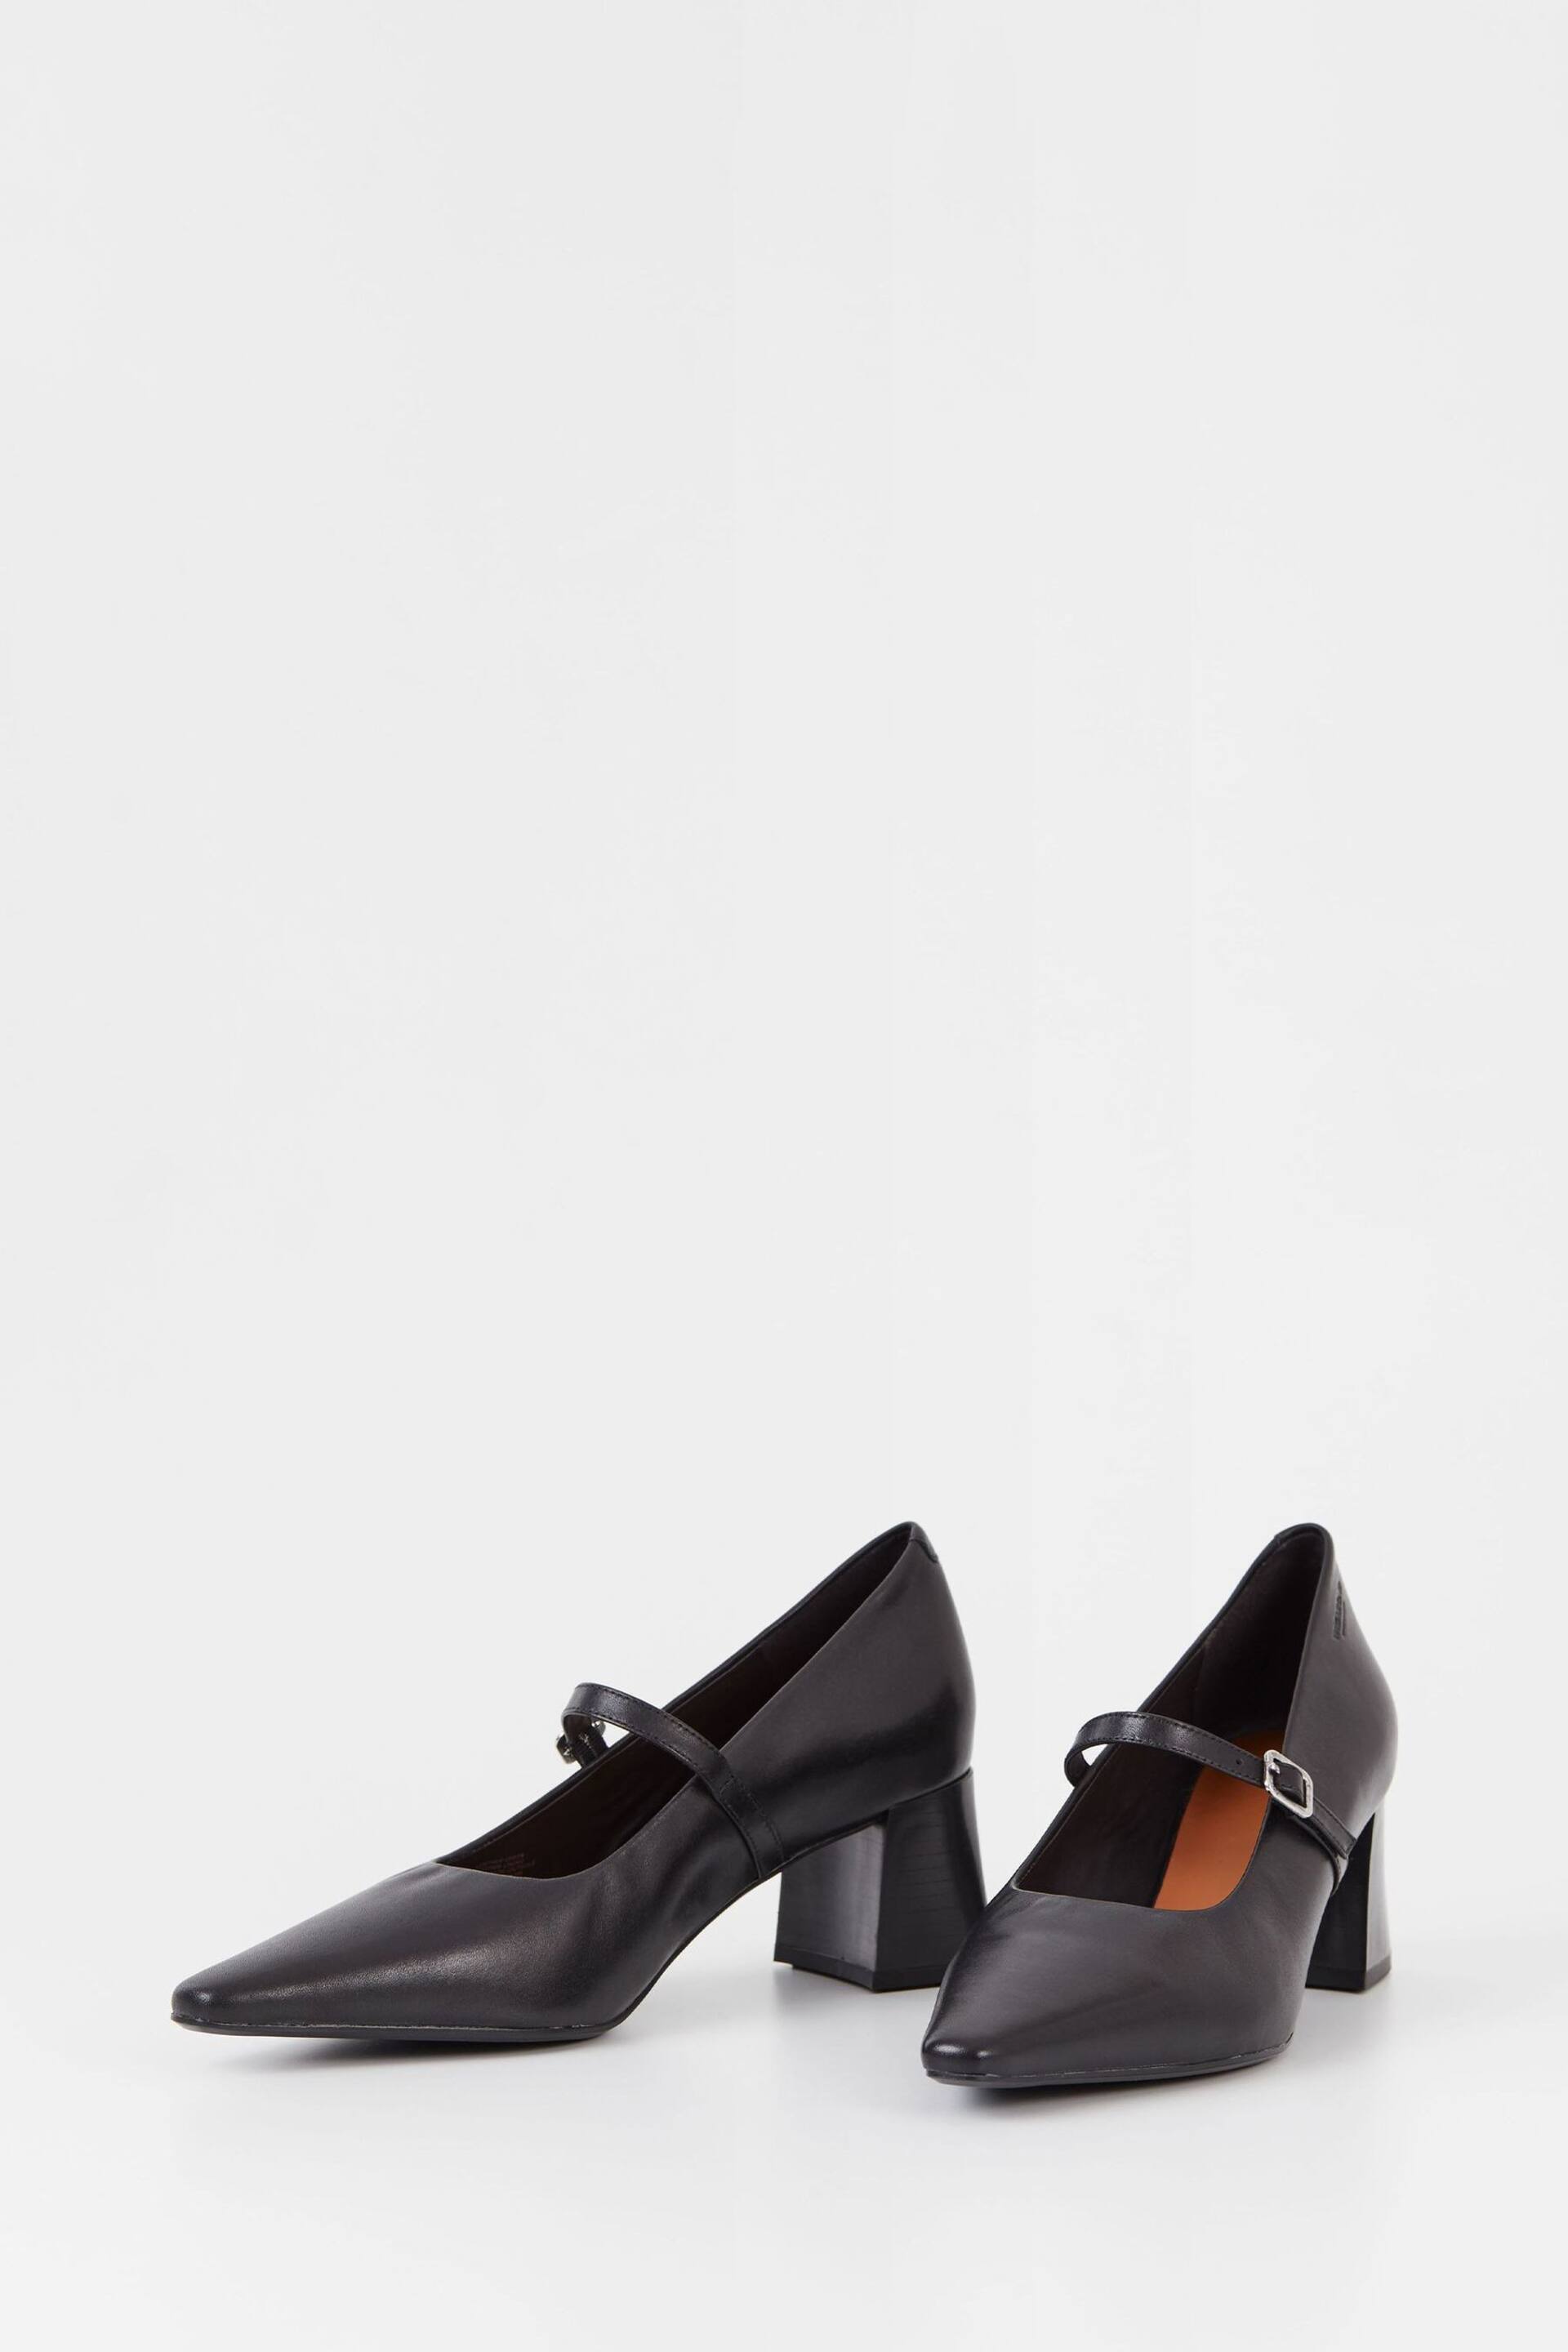 Vagabond Altea Mary Jane Black Shoes - Image 2 of 3